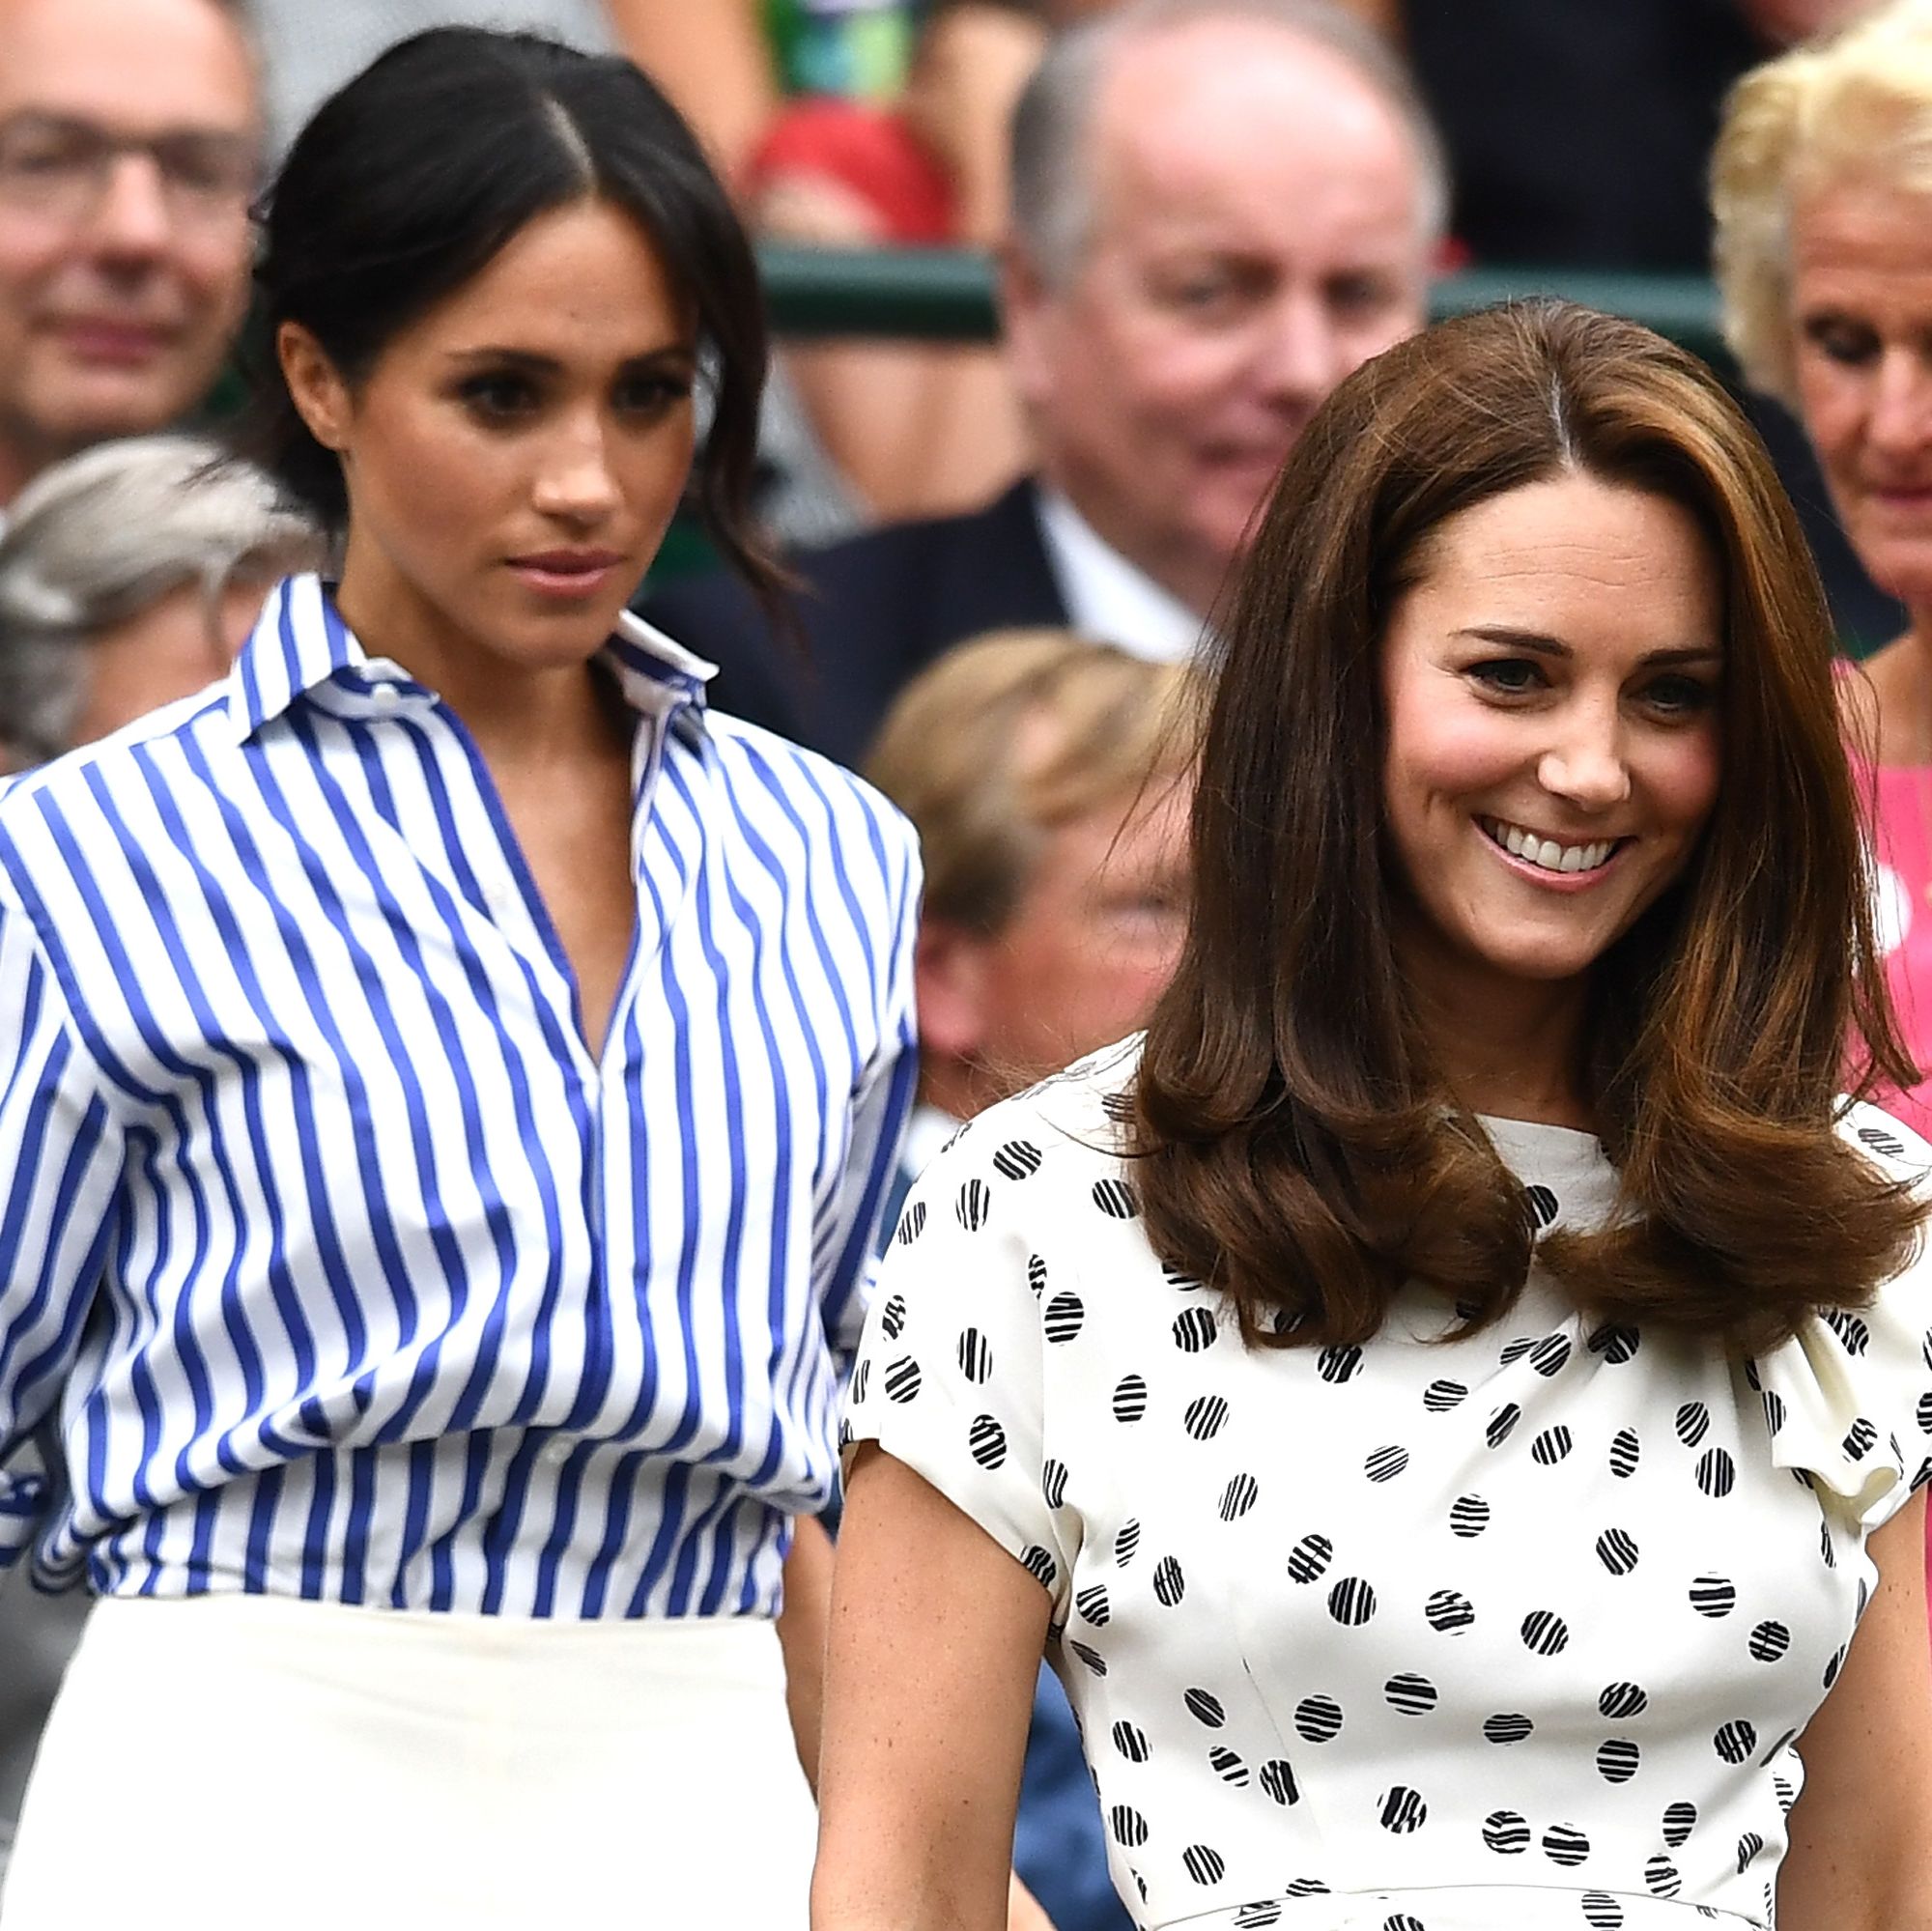 Prince Harry Details Huge Fight Between Meghan Markle and Kate Middleton in Memoir